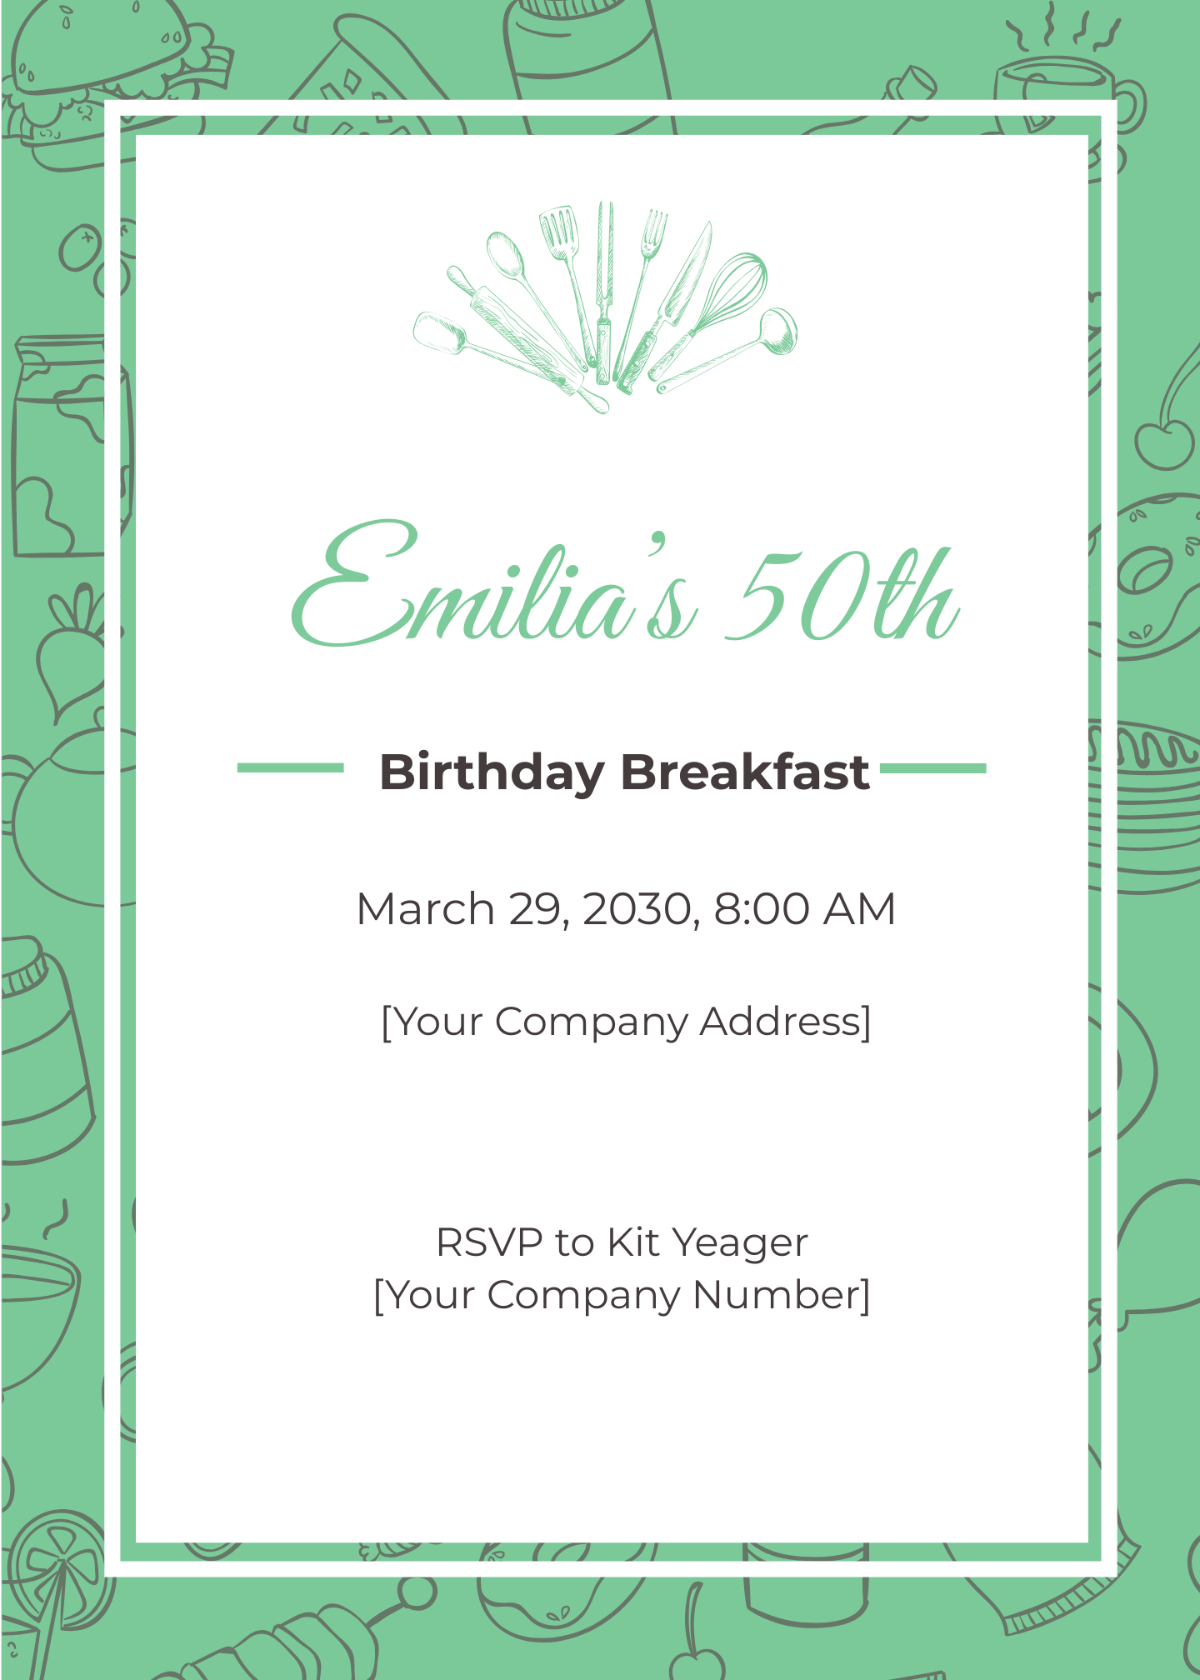 Birthday Breakfast Invitation